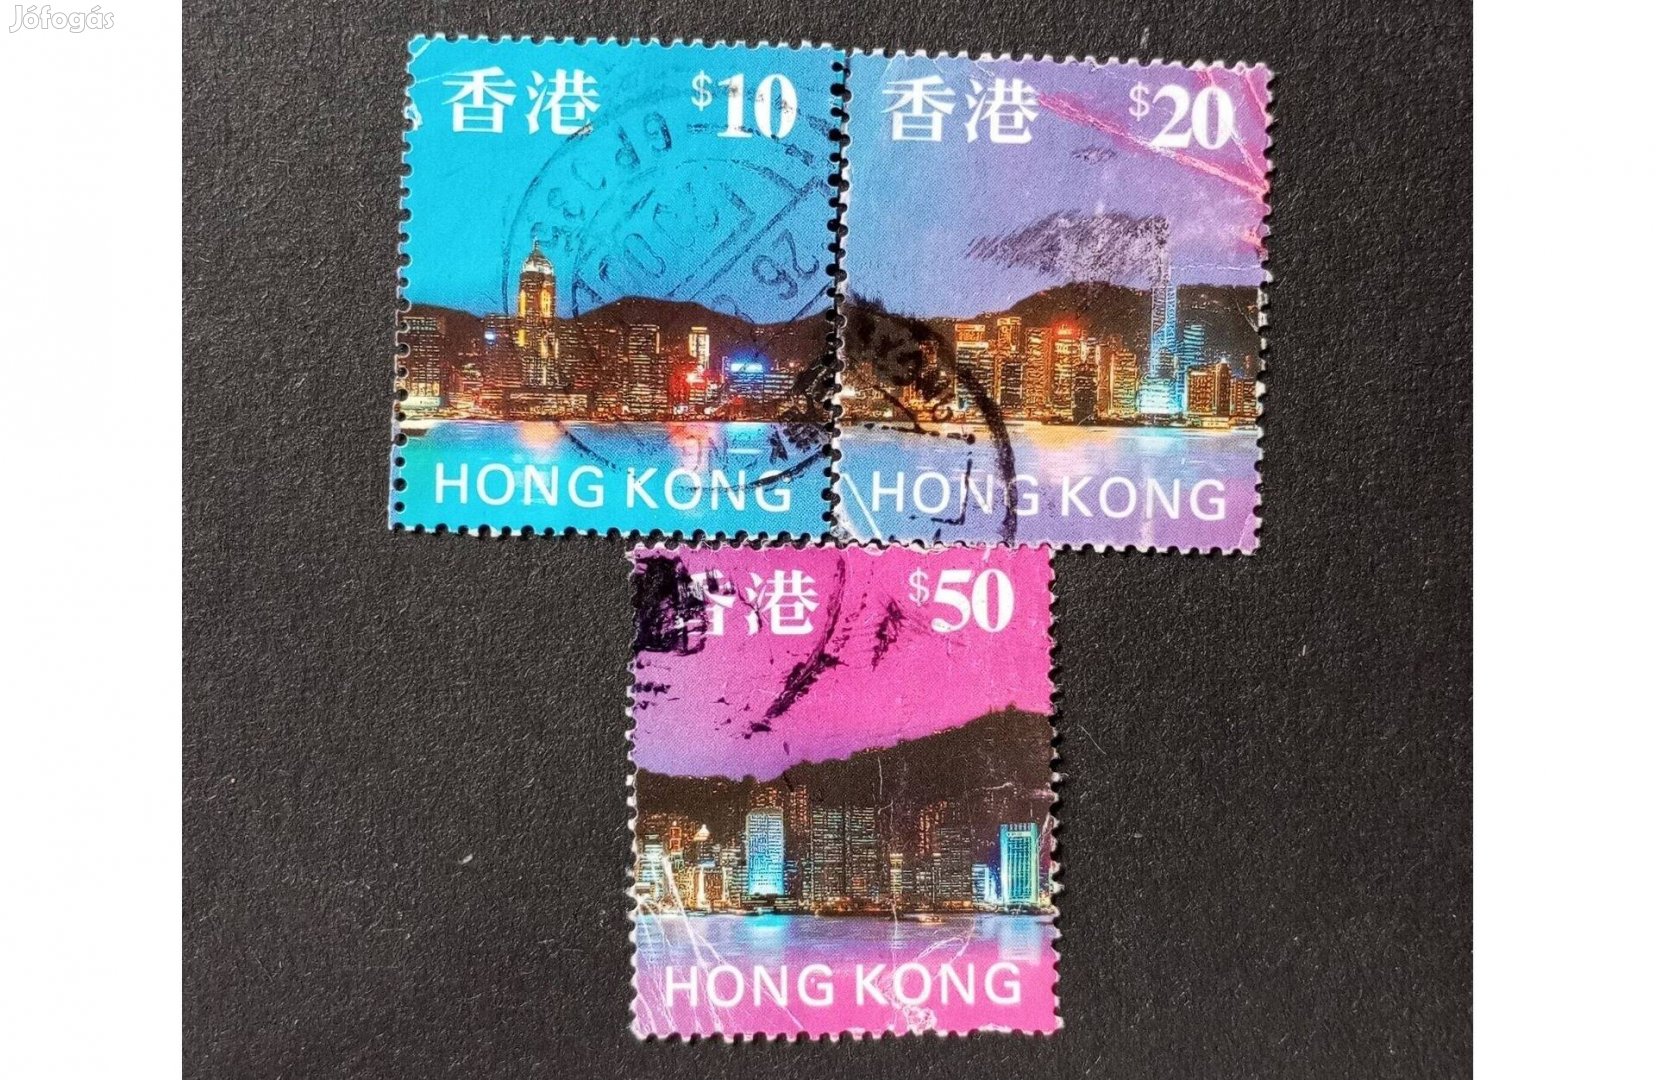 1997 Kína Hong Kong Skyline komplett bélyegsor